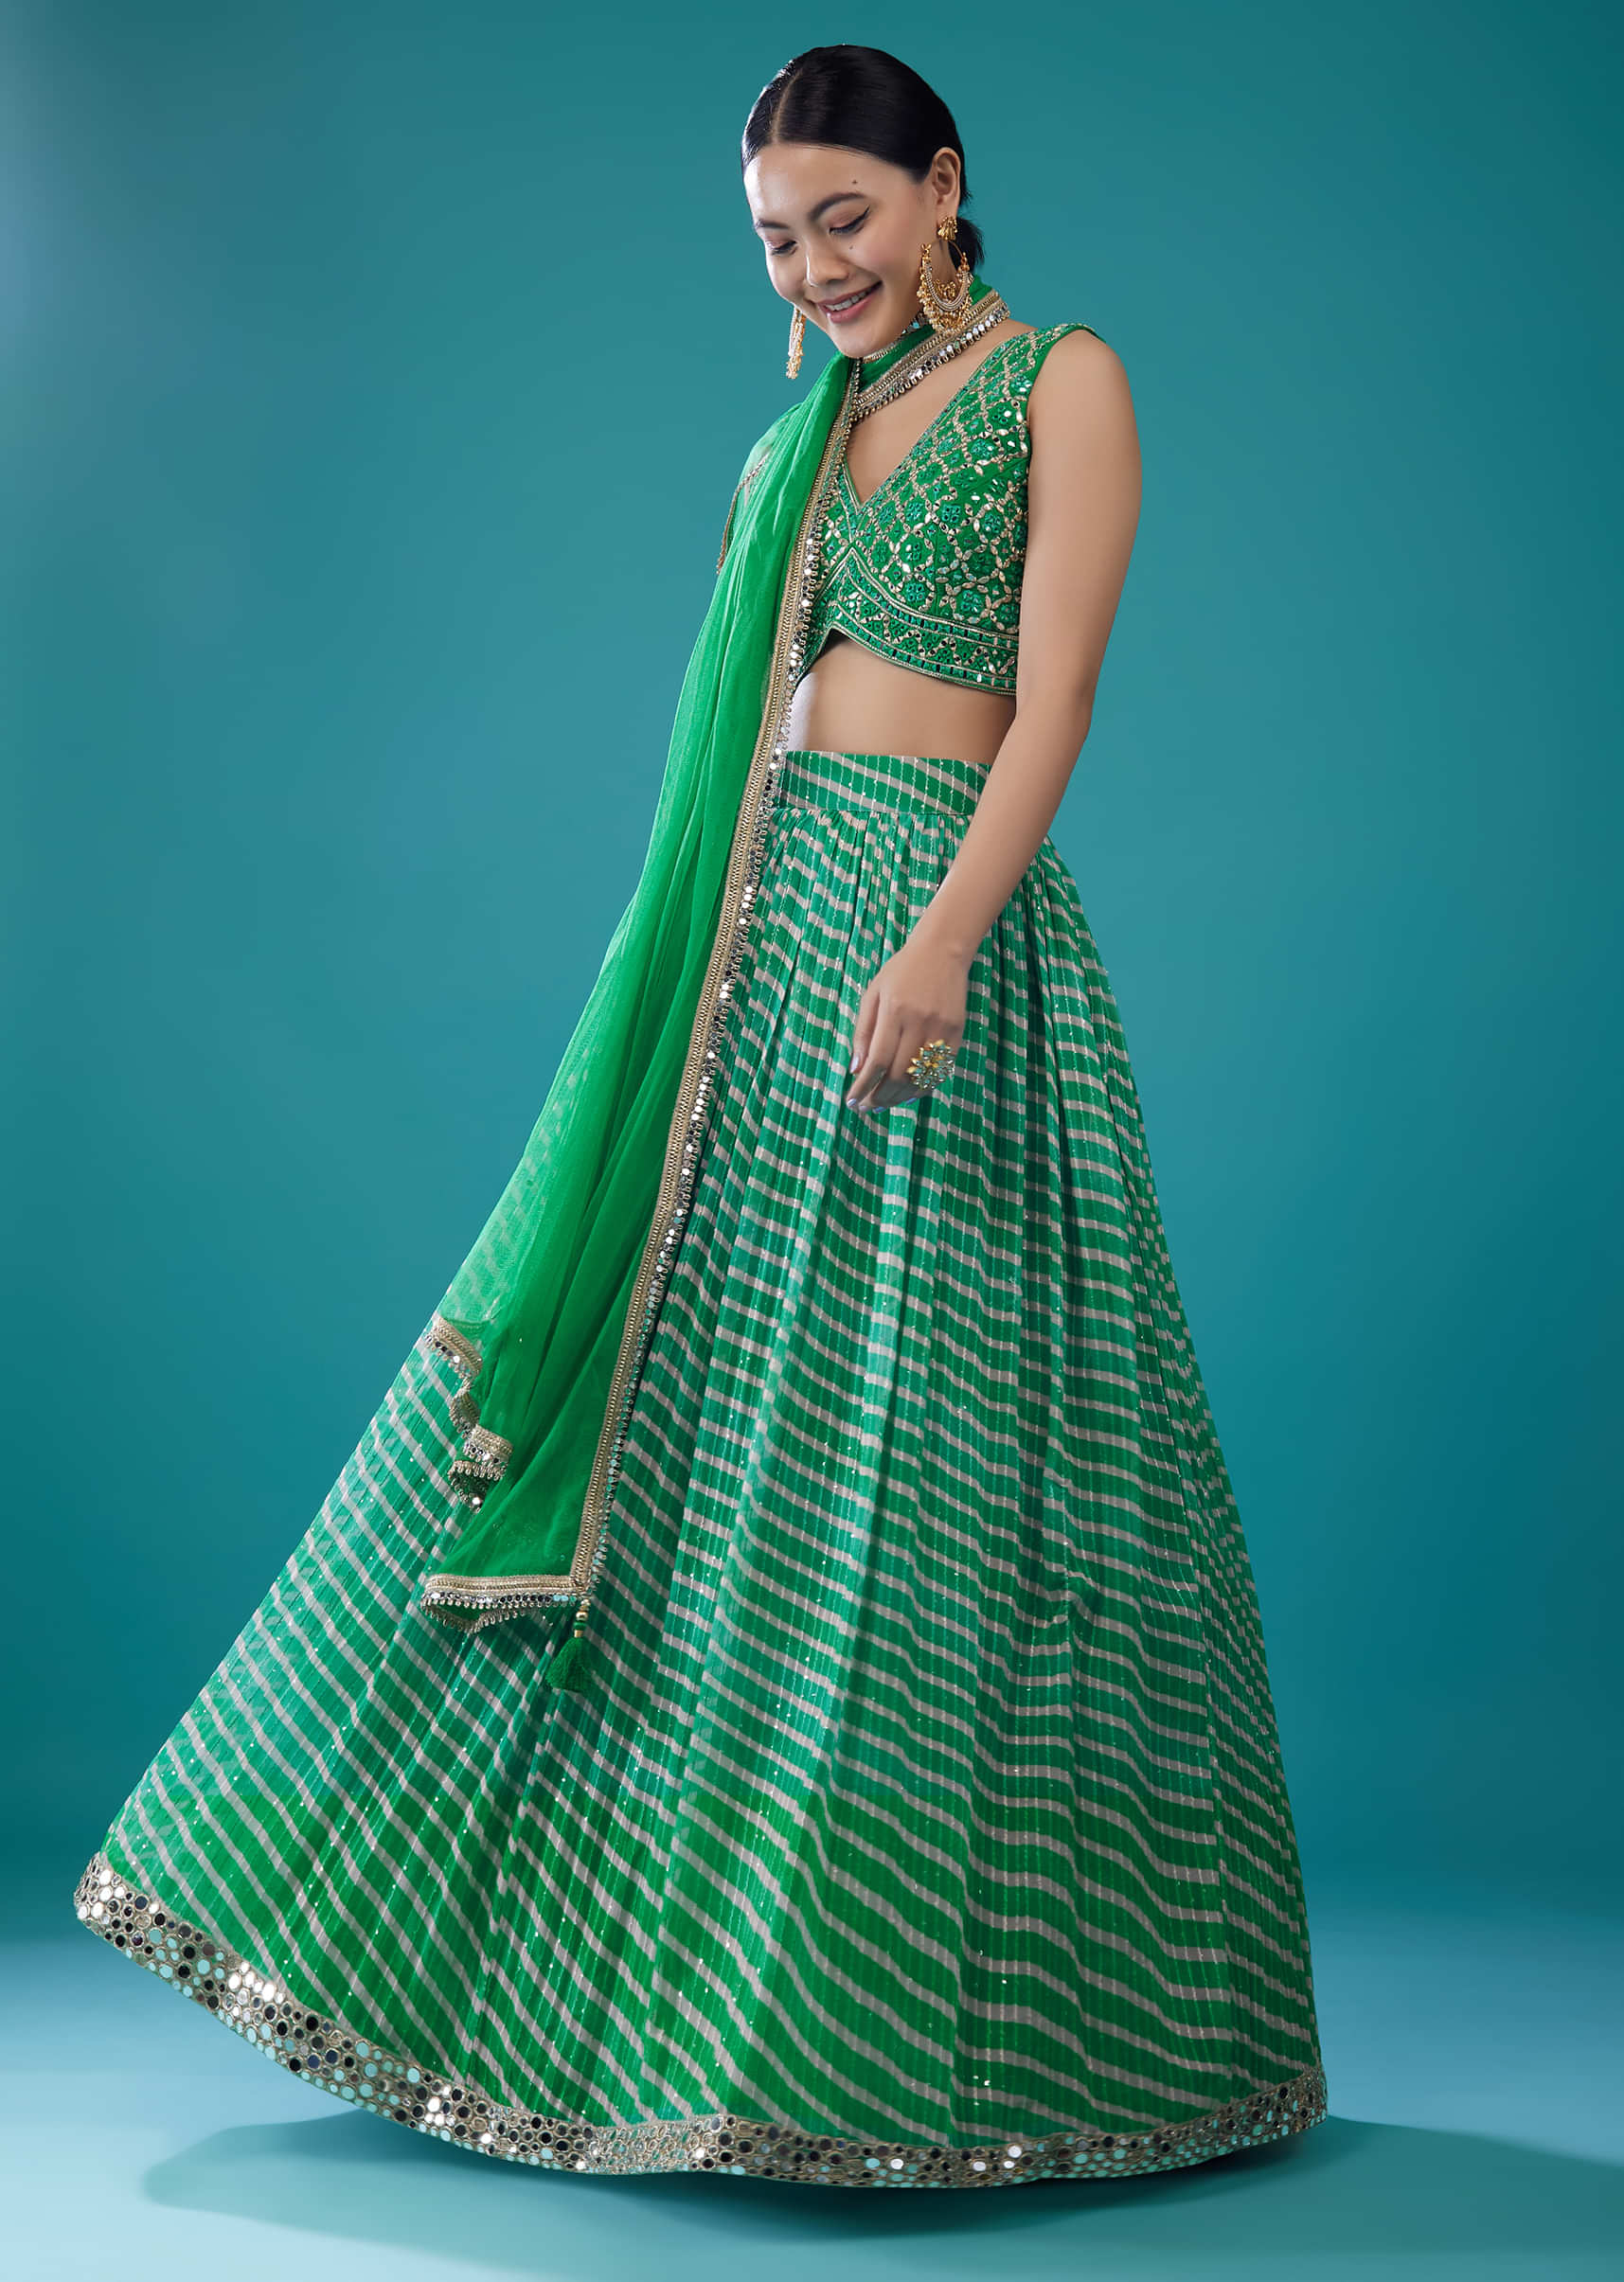 Evening Party Wear Designer Lengha Choli | Wedding Shaadi Dress